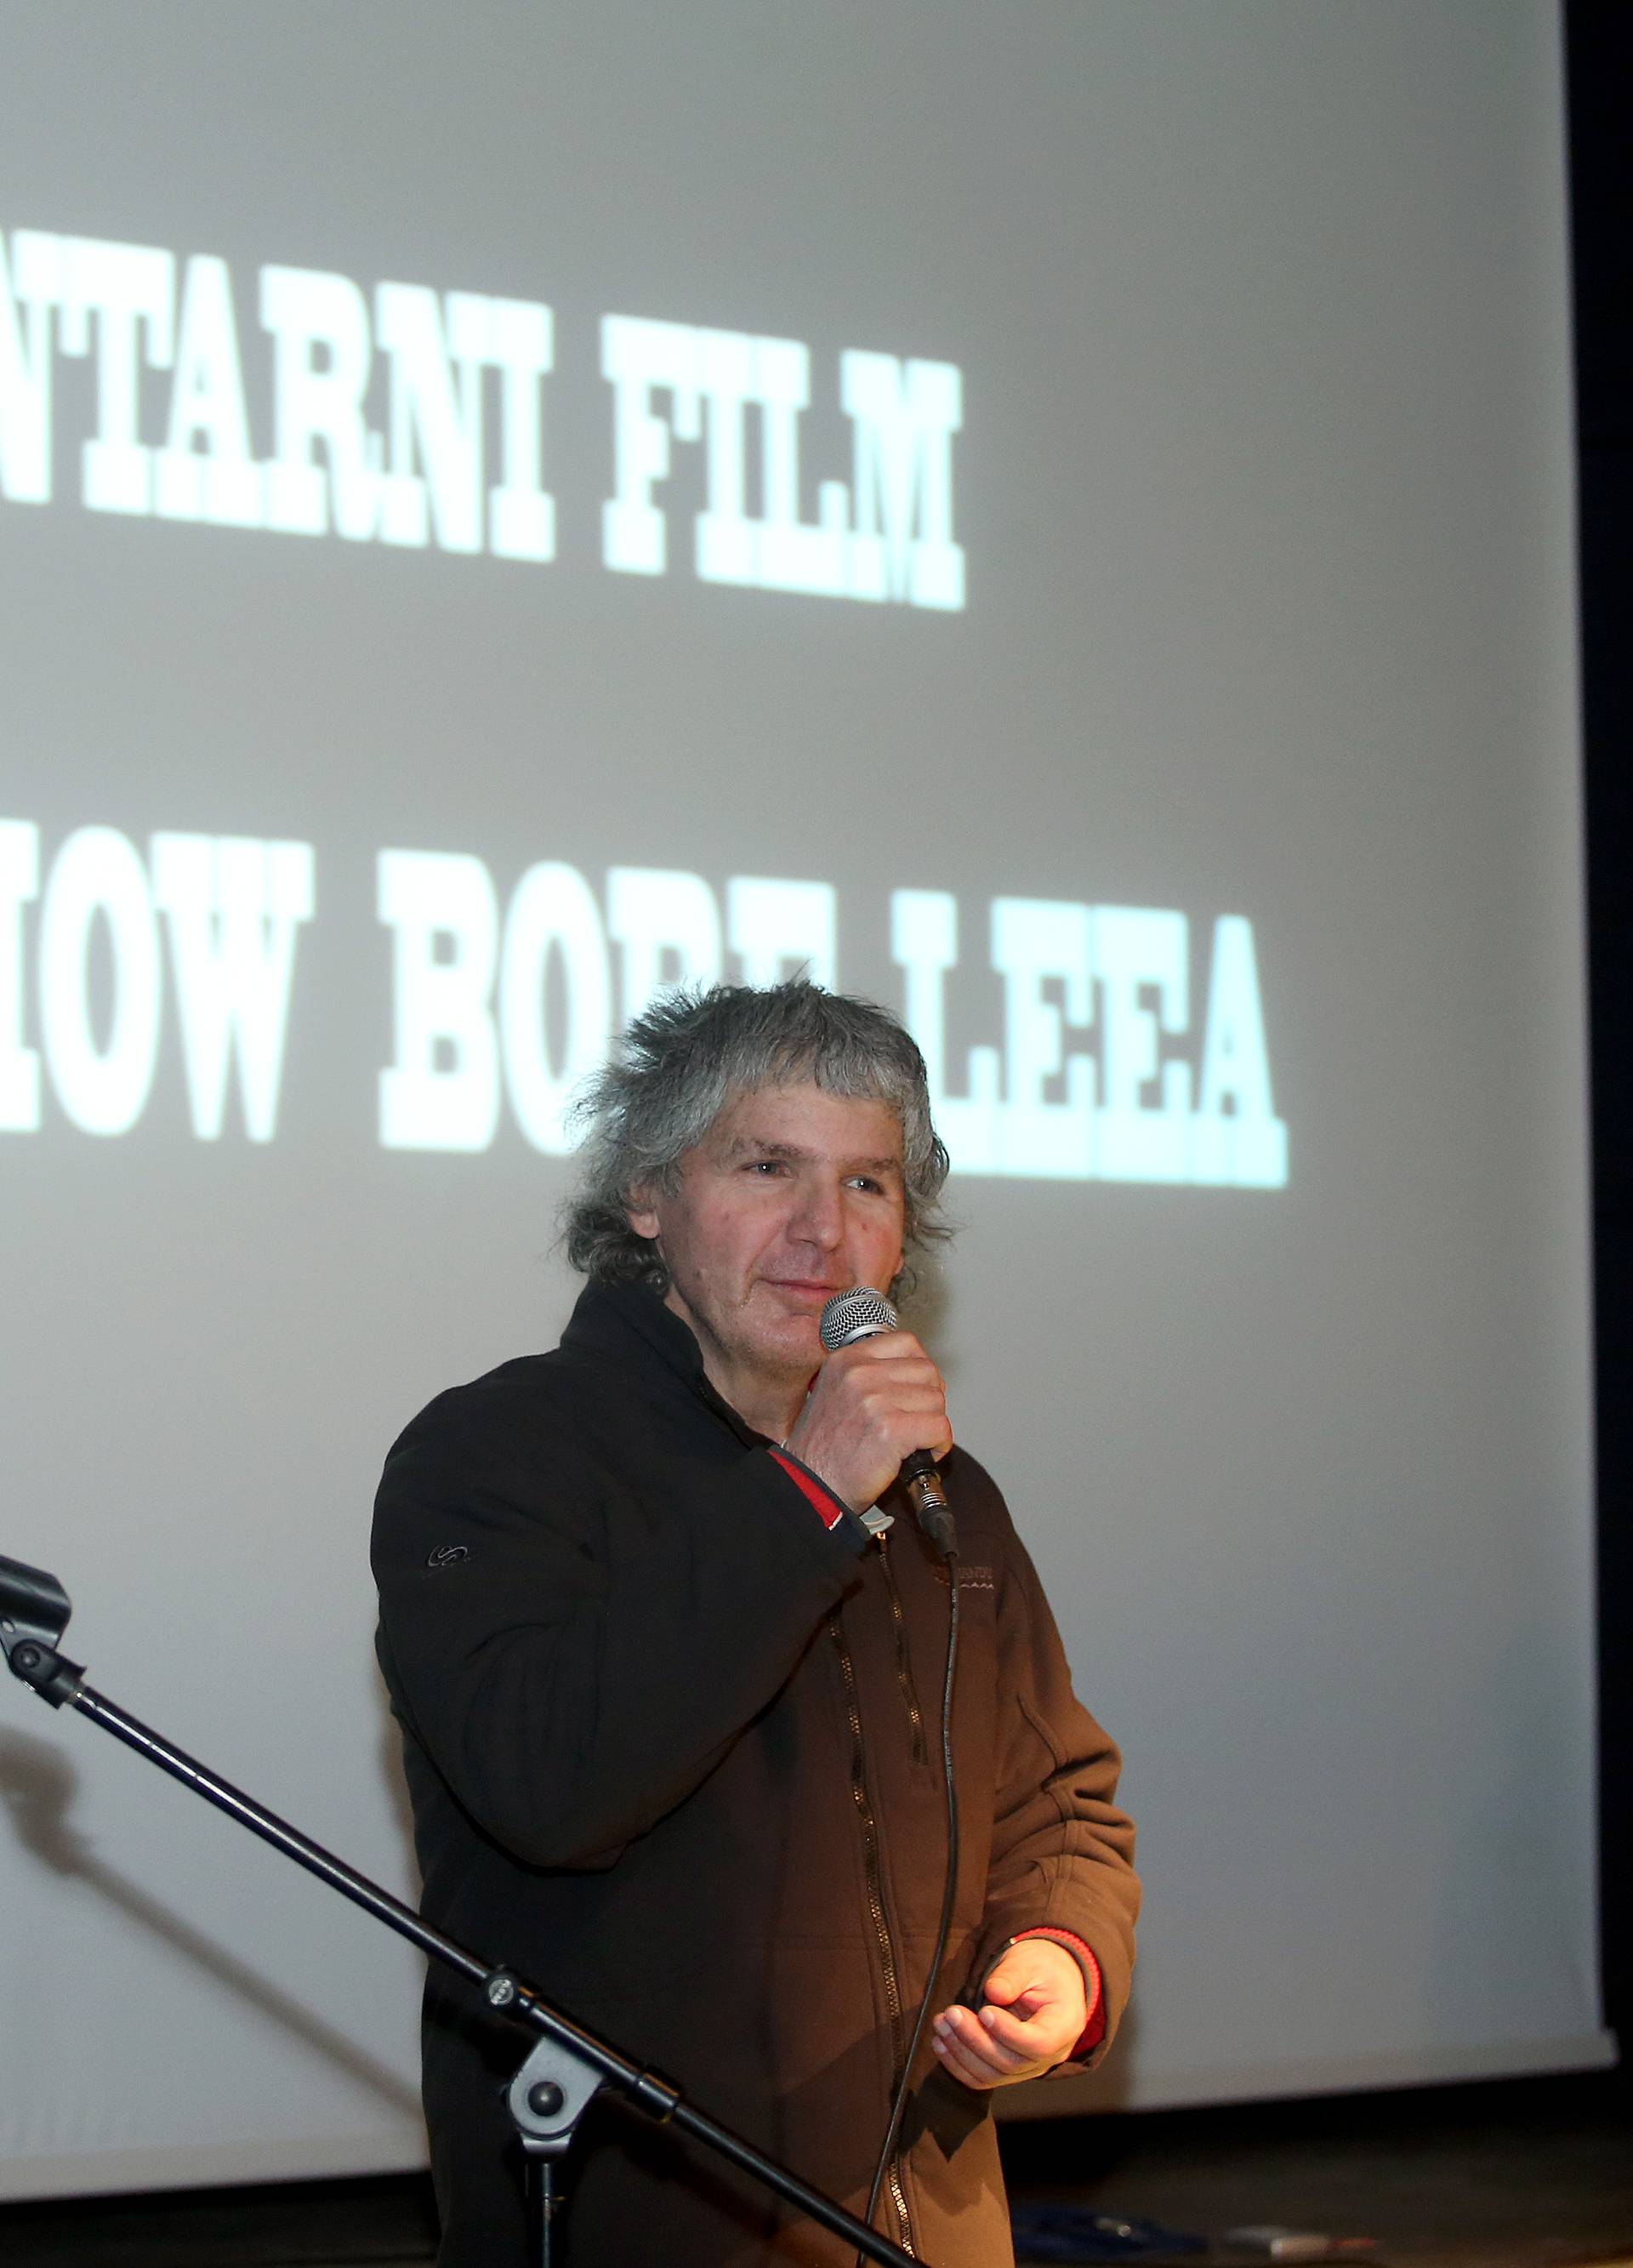 Zagreb: Boris IvkoviÄ u MoÄvari predstavio svoj film Bore Lee show